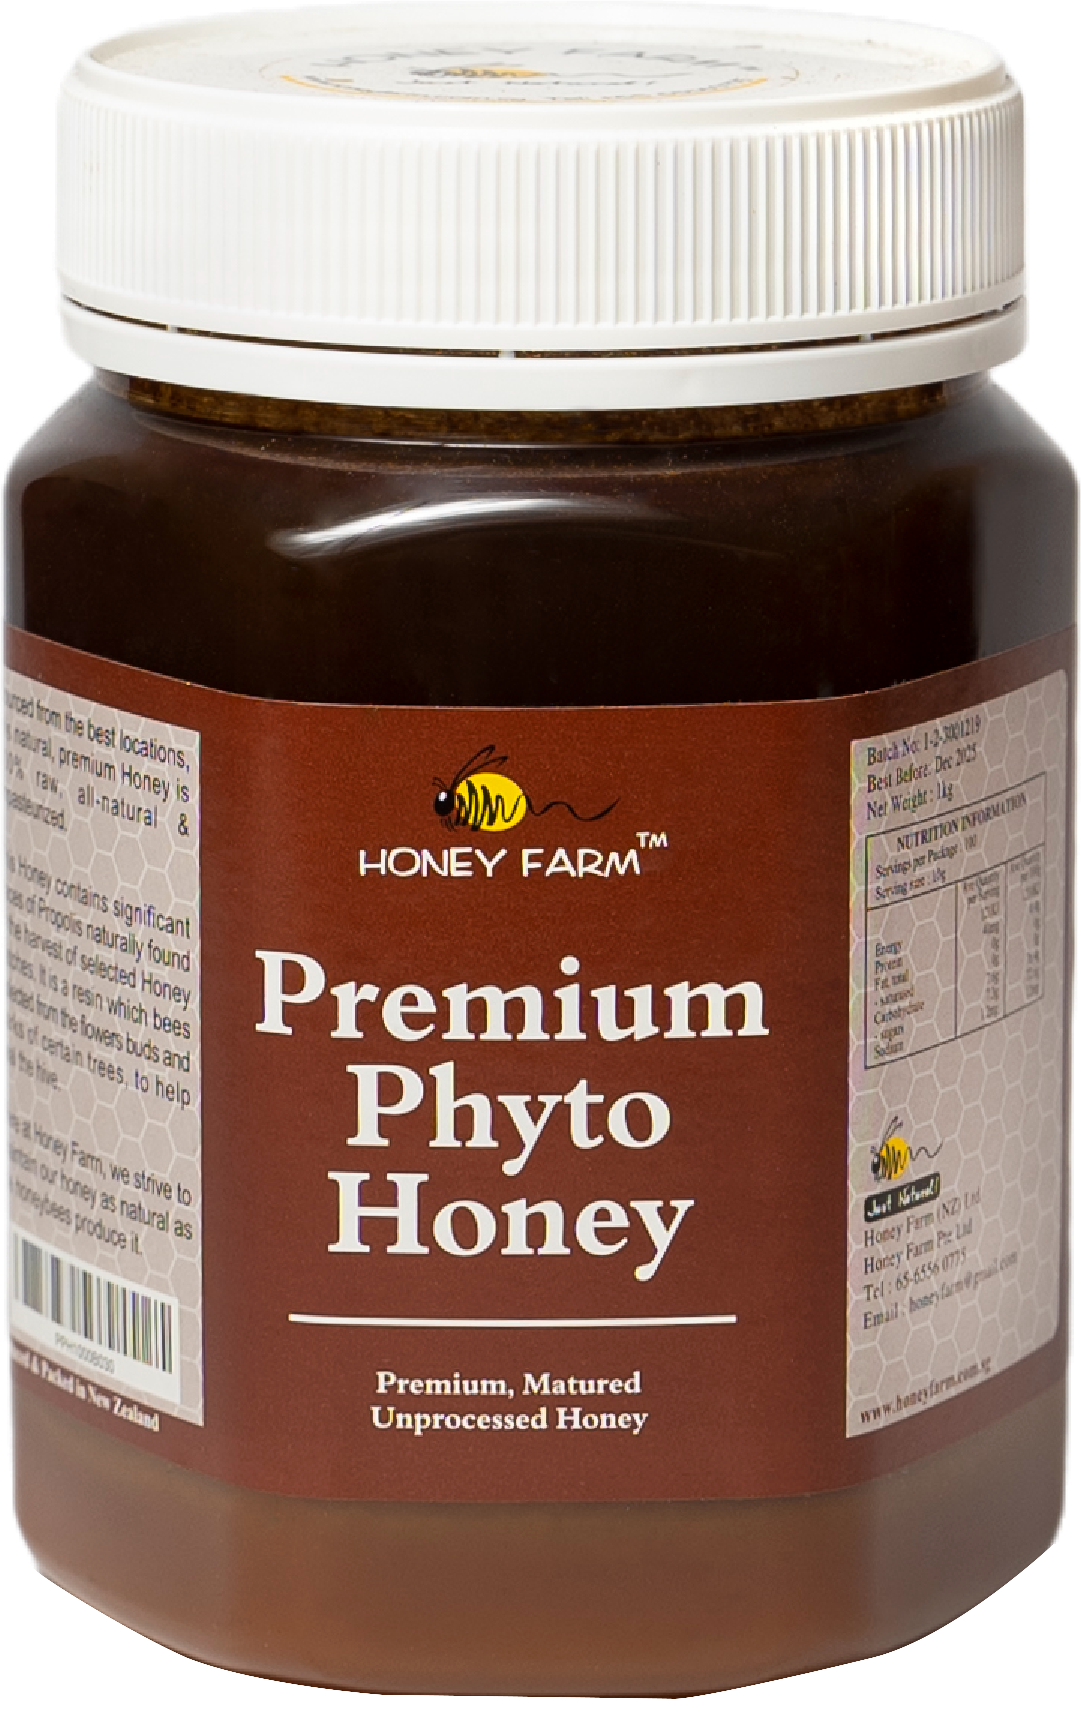 Premium Phyto Honey